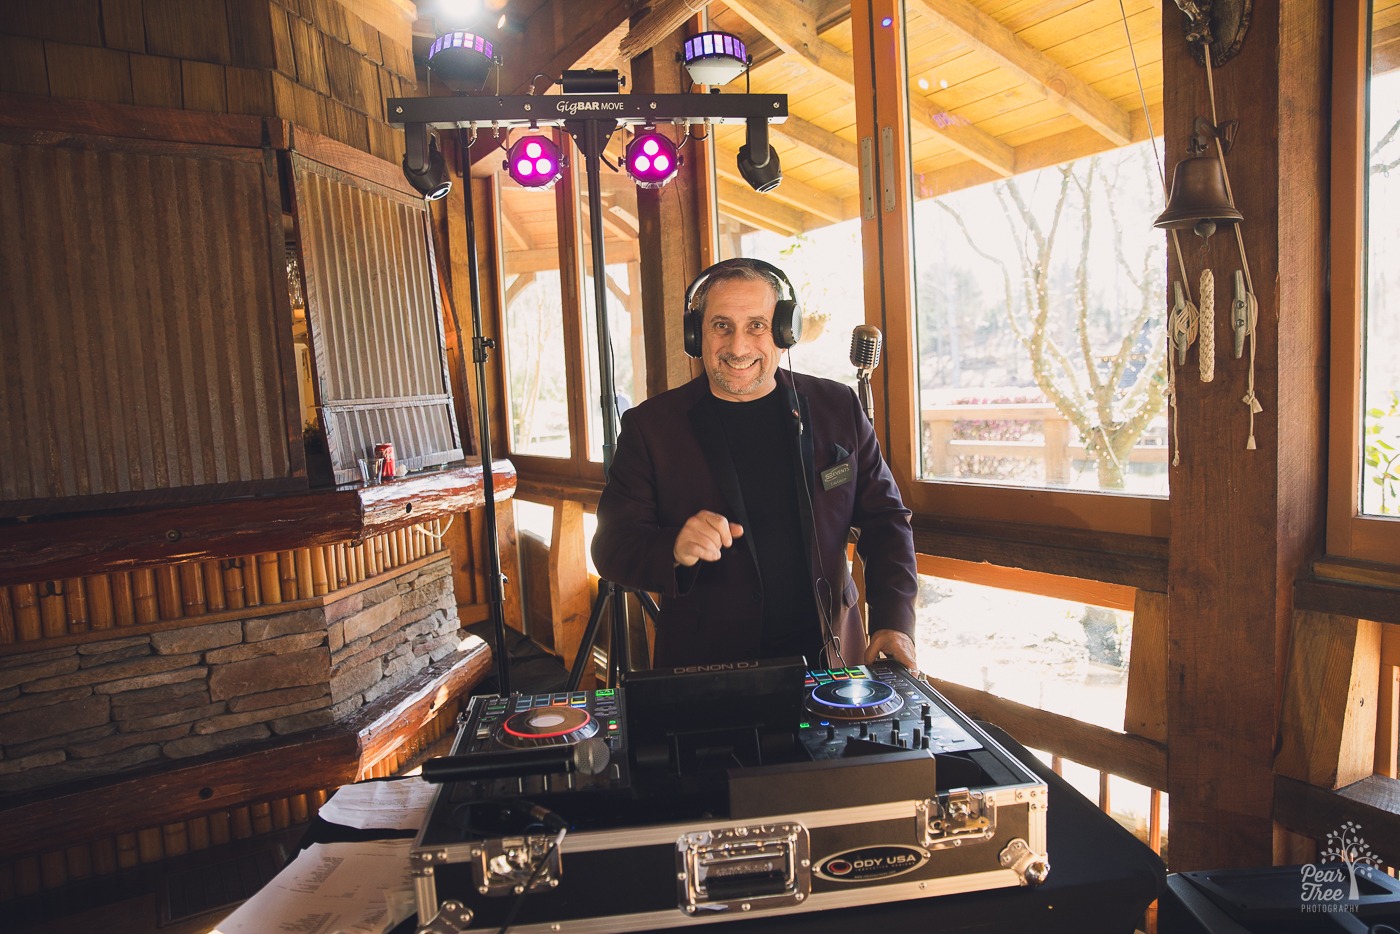 Lou Guzzo behind Spectrum Entertainment DJ set up at Rocky's Lake Estate wedding reception